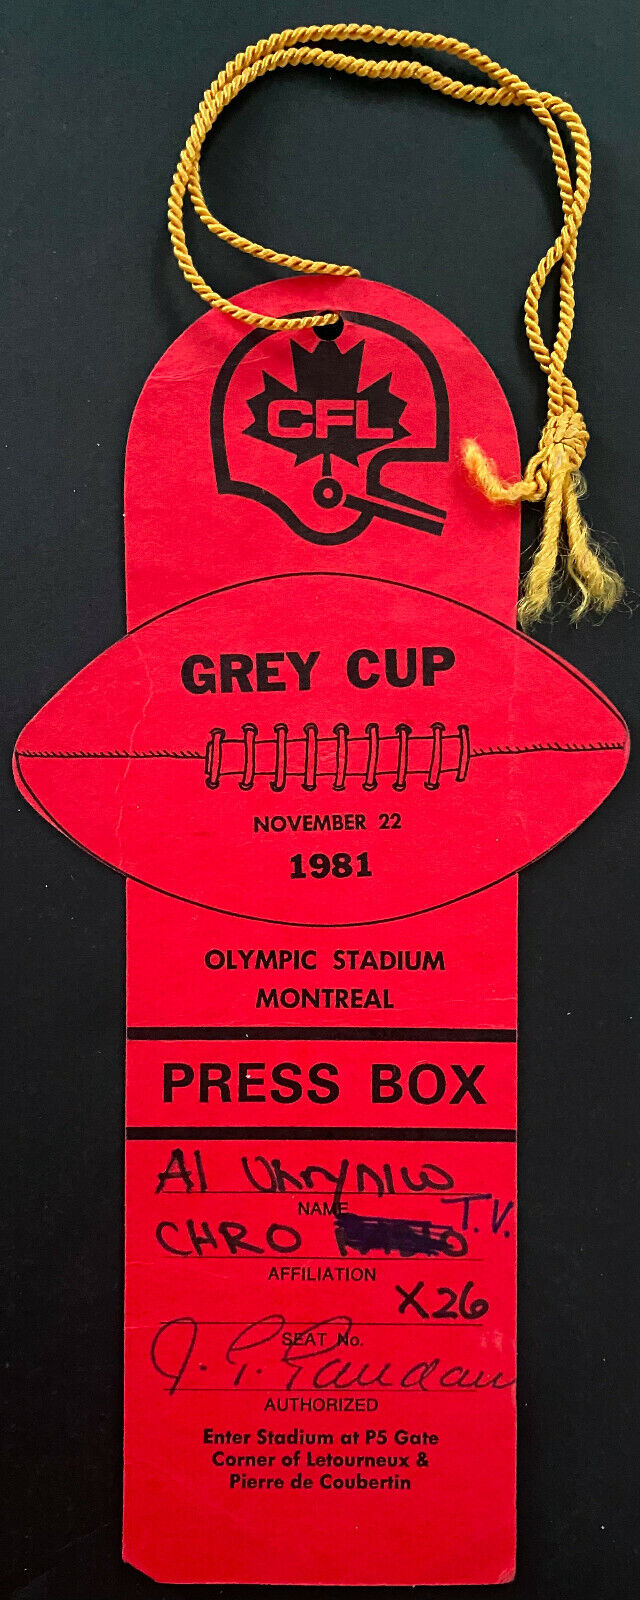 1981 CFL Grey Cup Football Press Box Pass Ticket Olympic Stadium Montreal